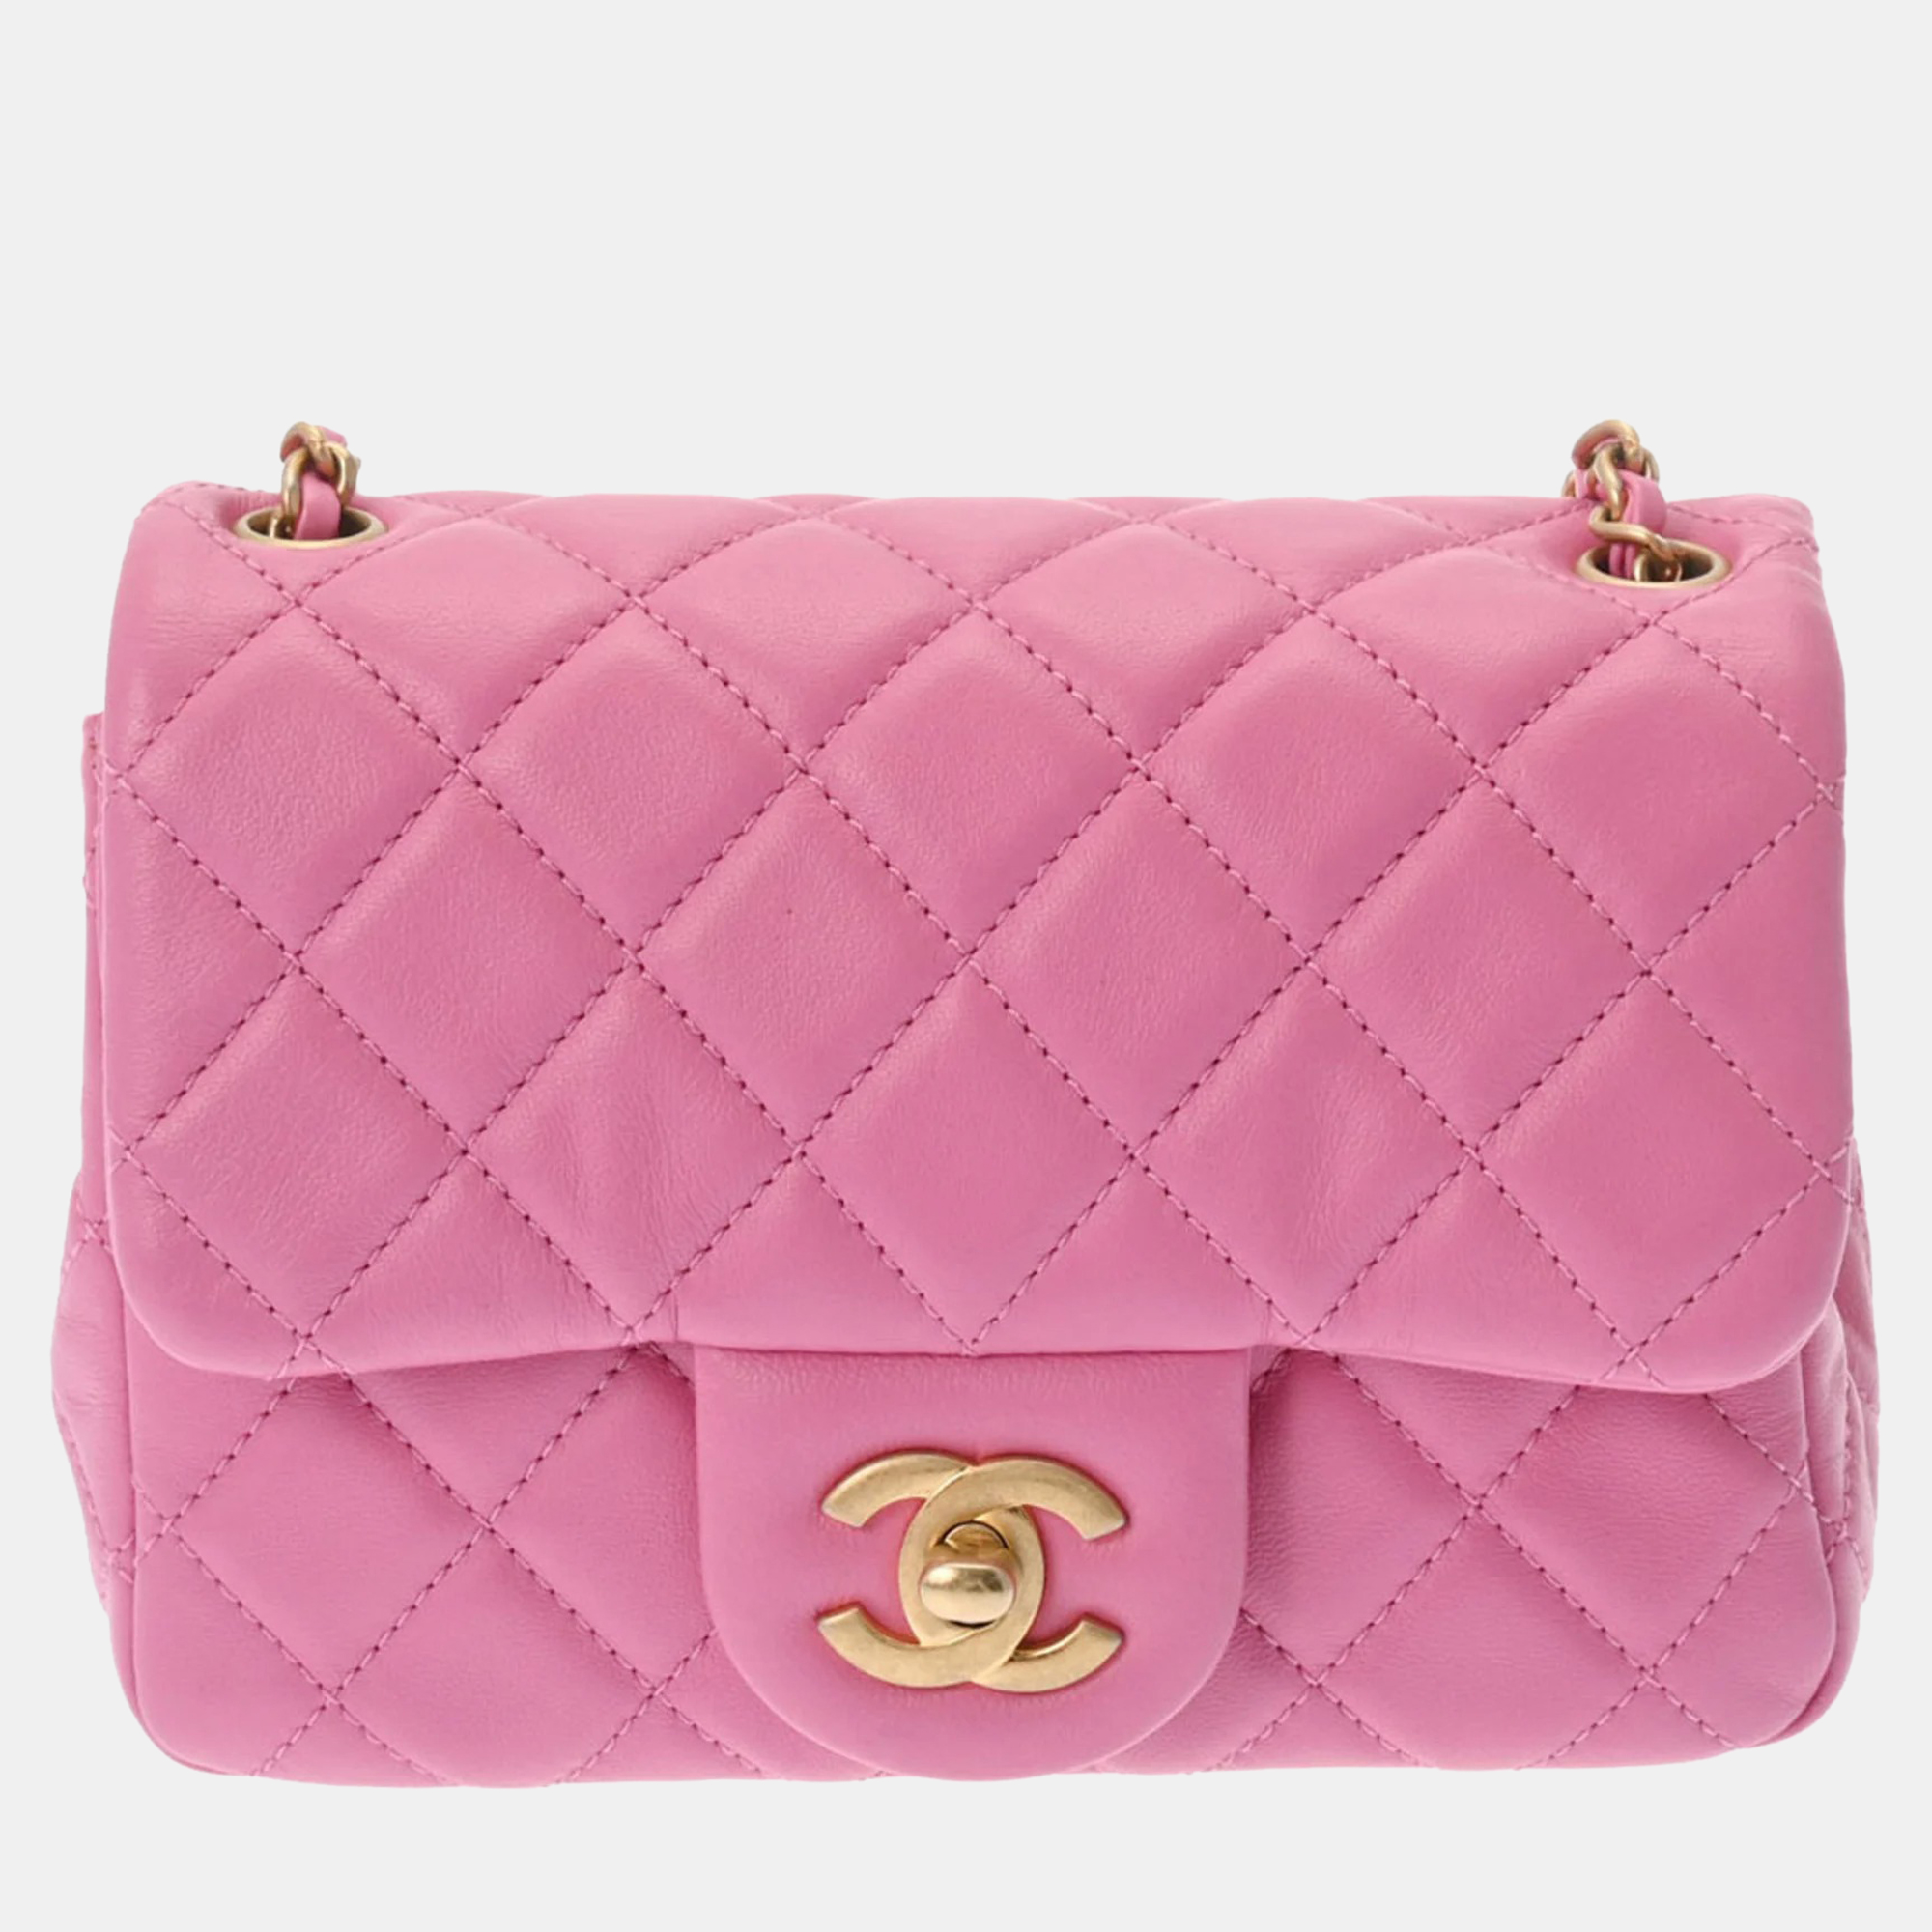 Chanel pink lambskin leather mini pearl crush flap bag